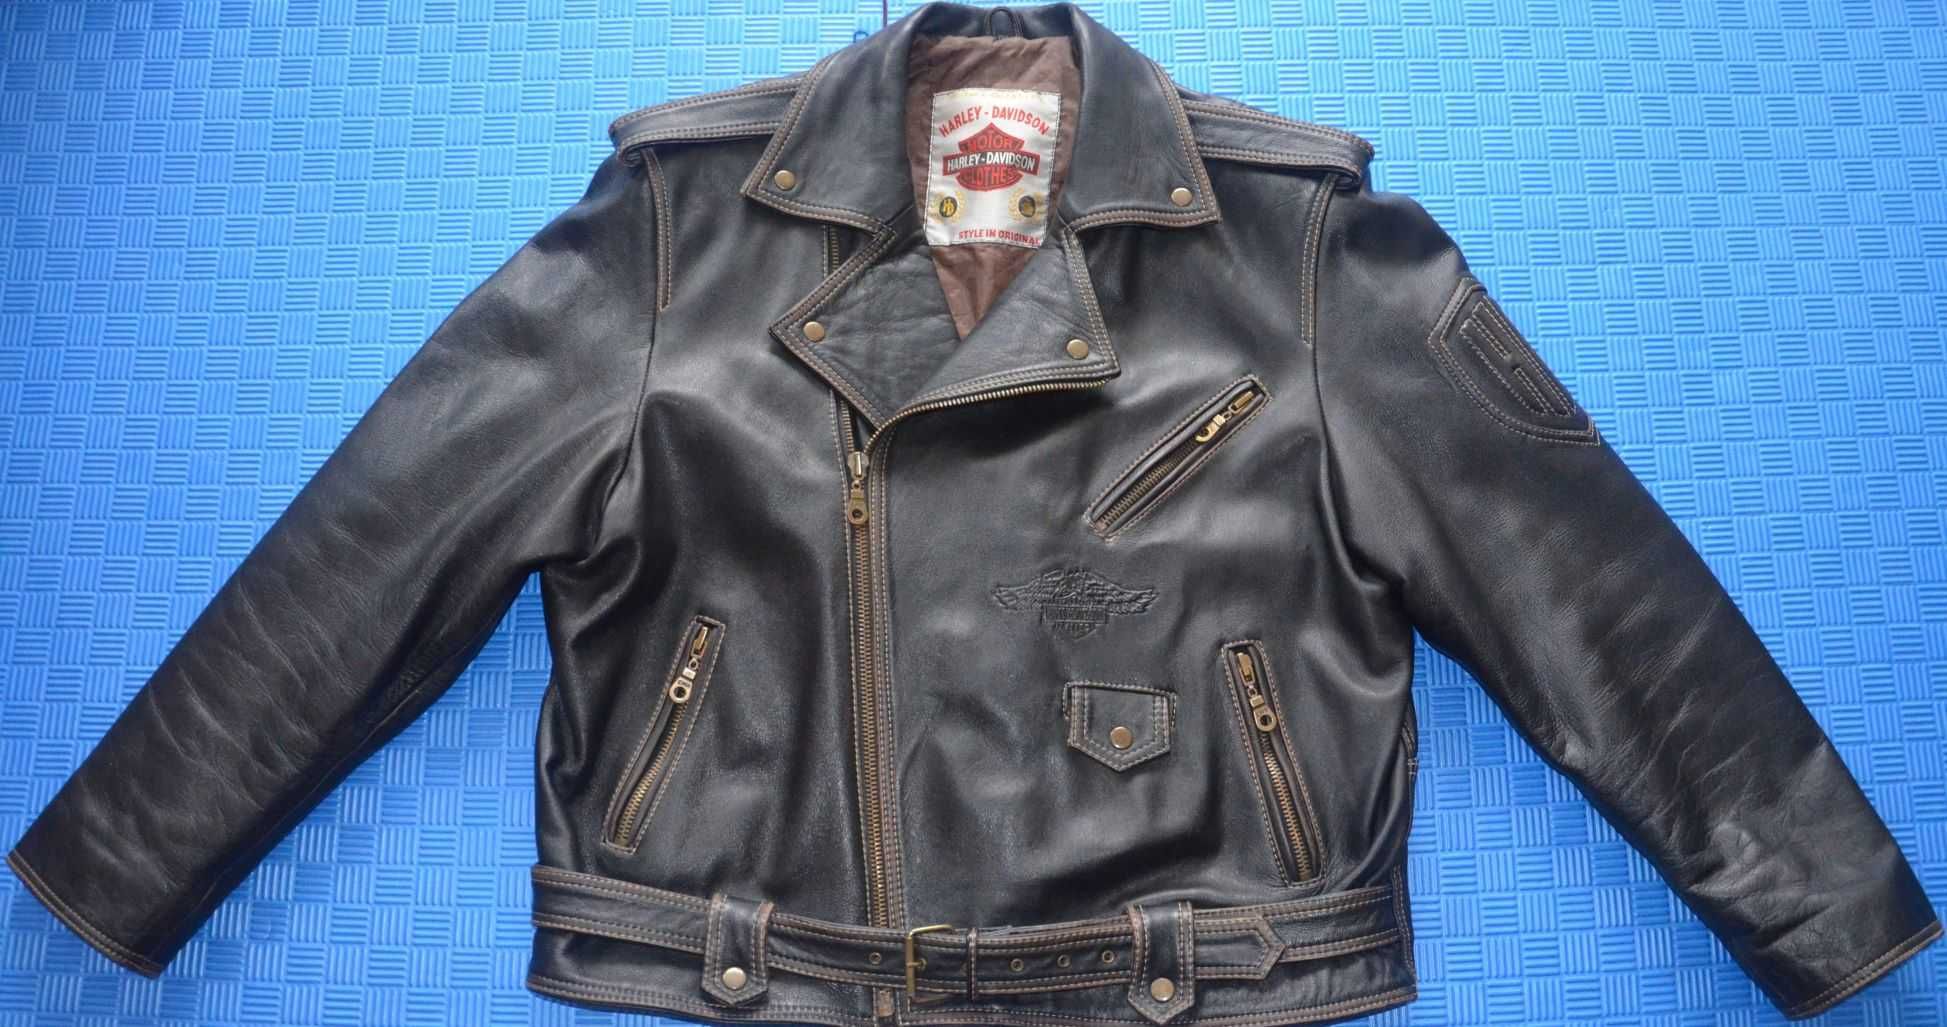 Куртка Harley Davidson (косуха)